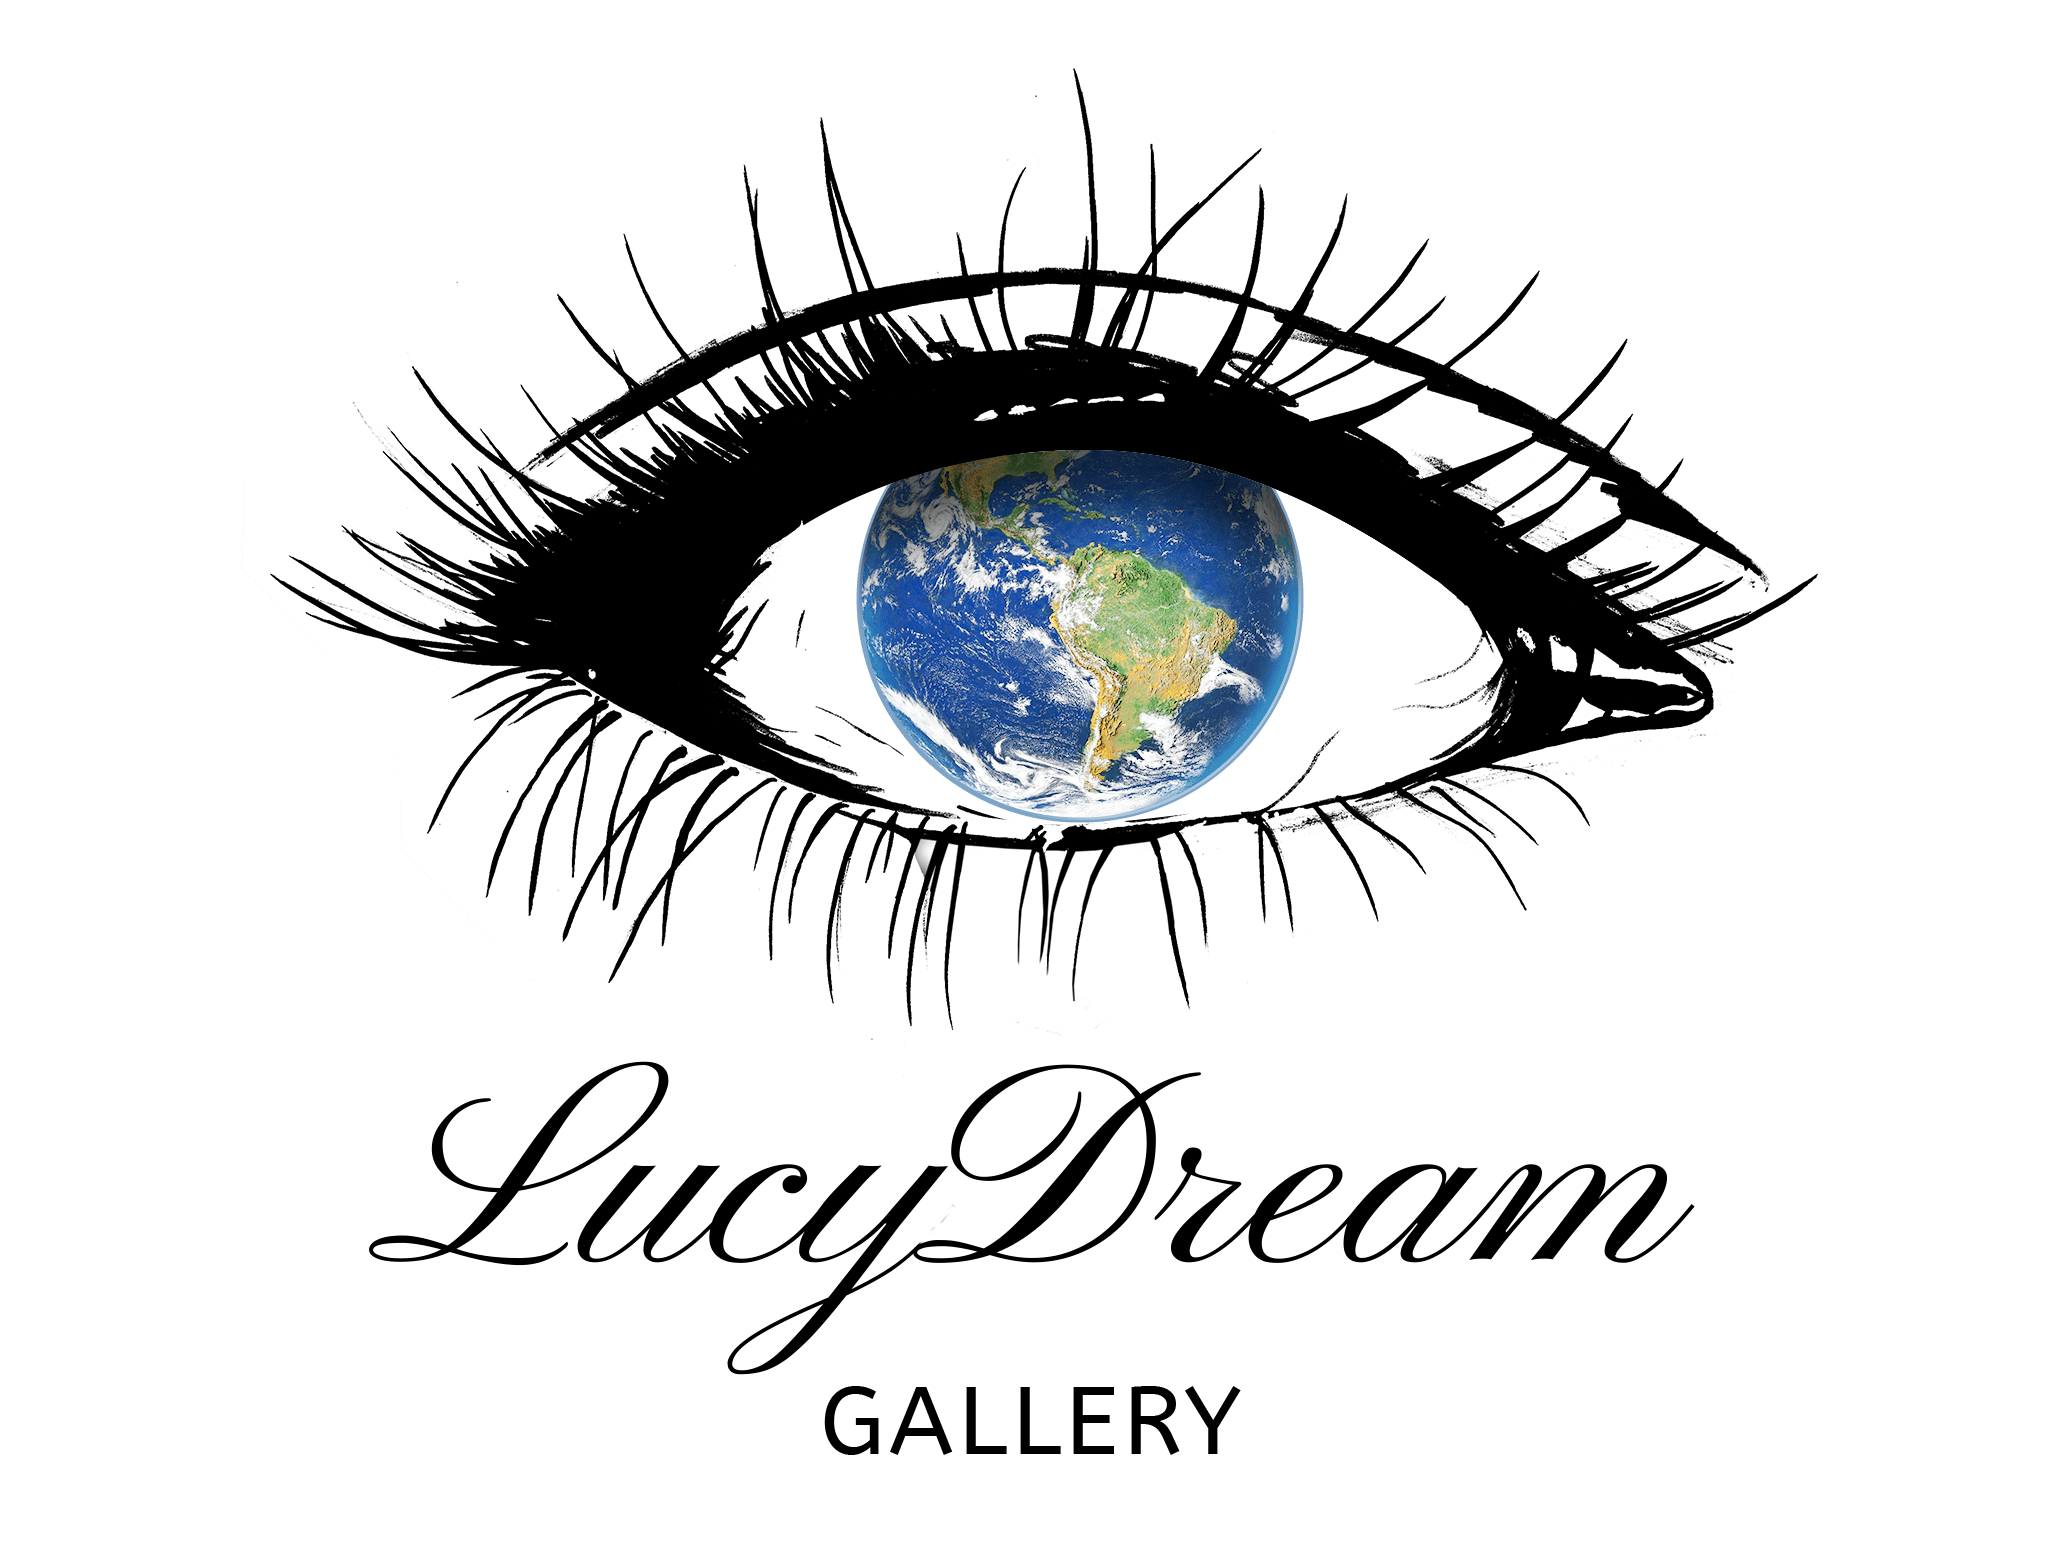 Lucy Dream Gallery company logo